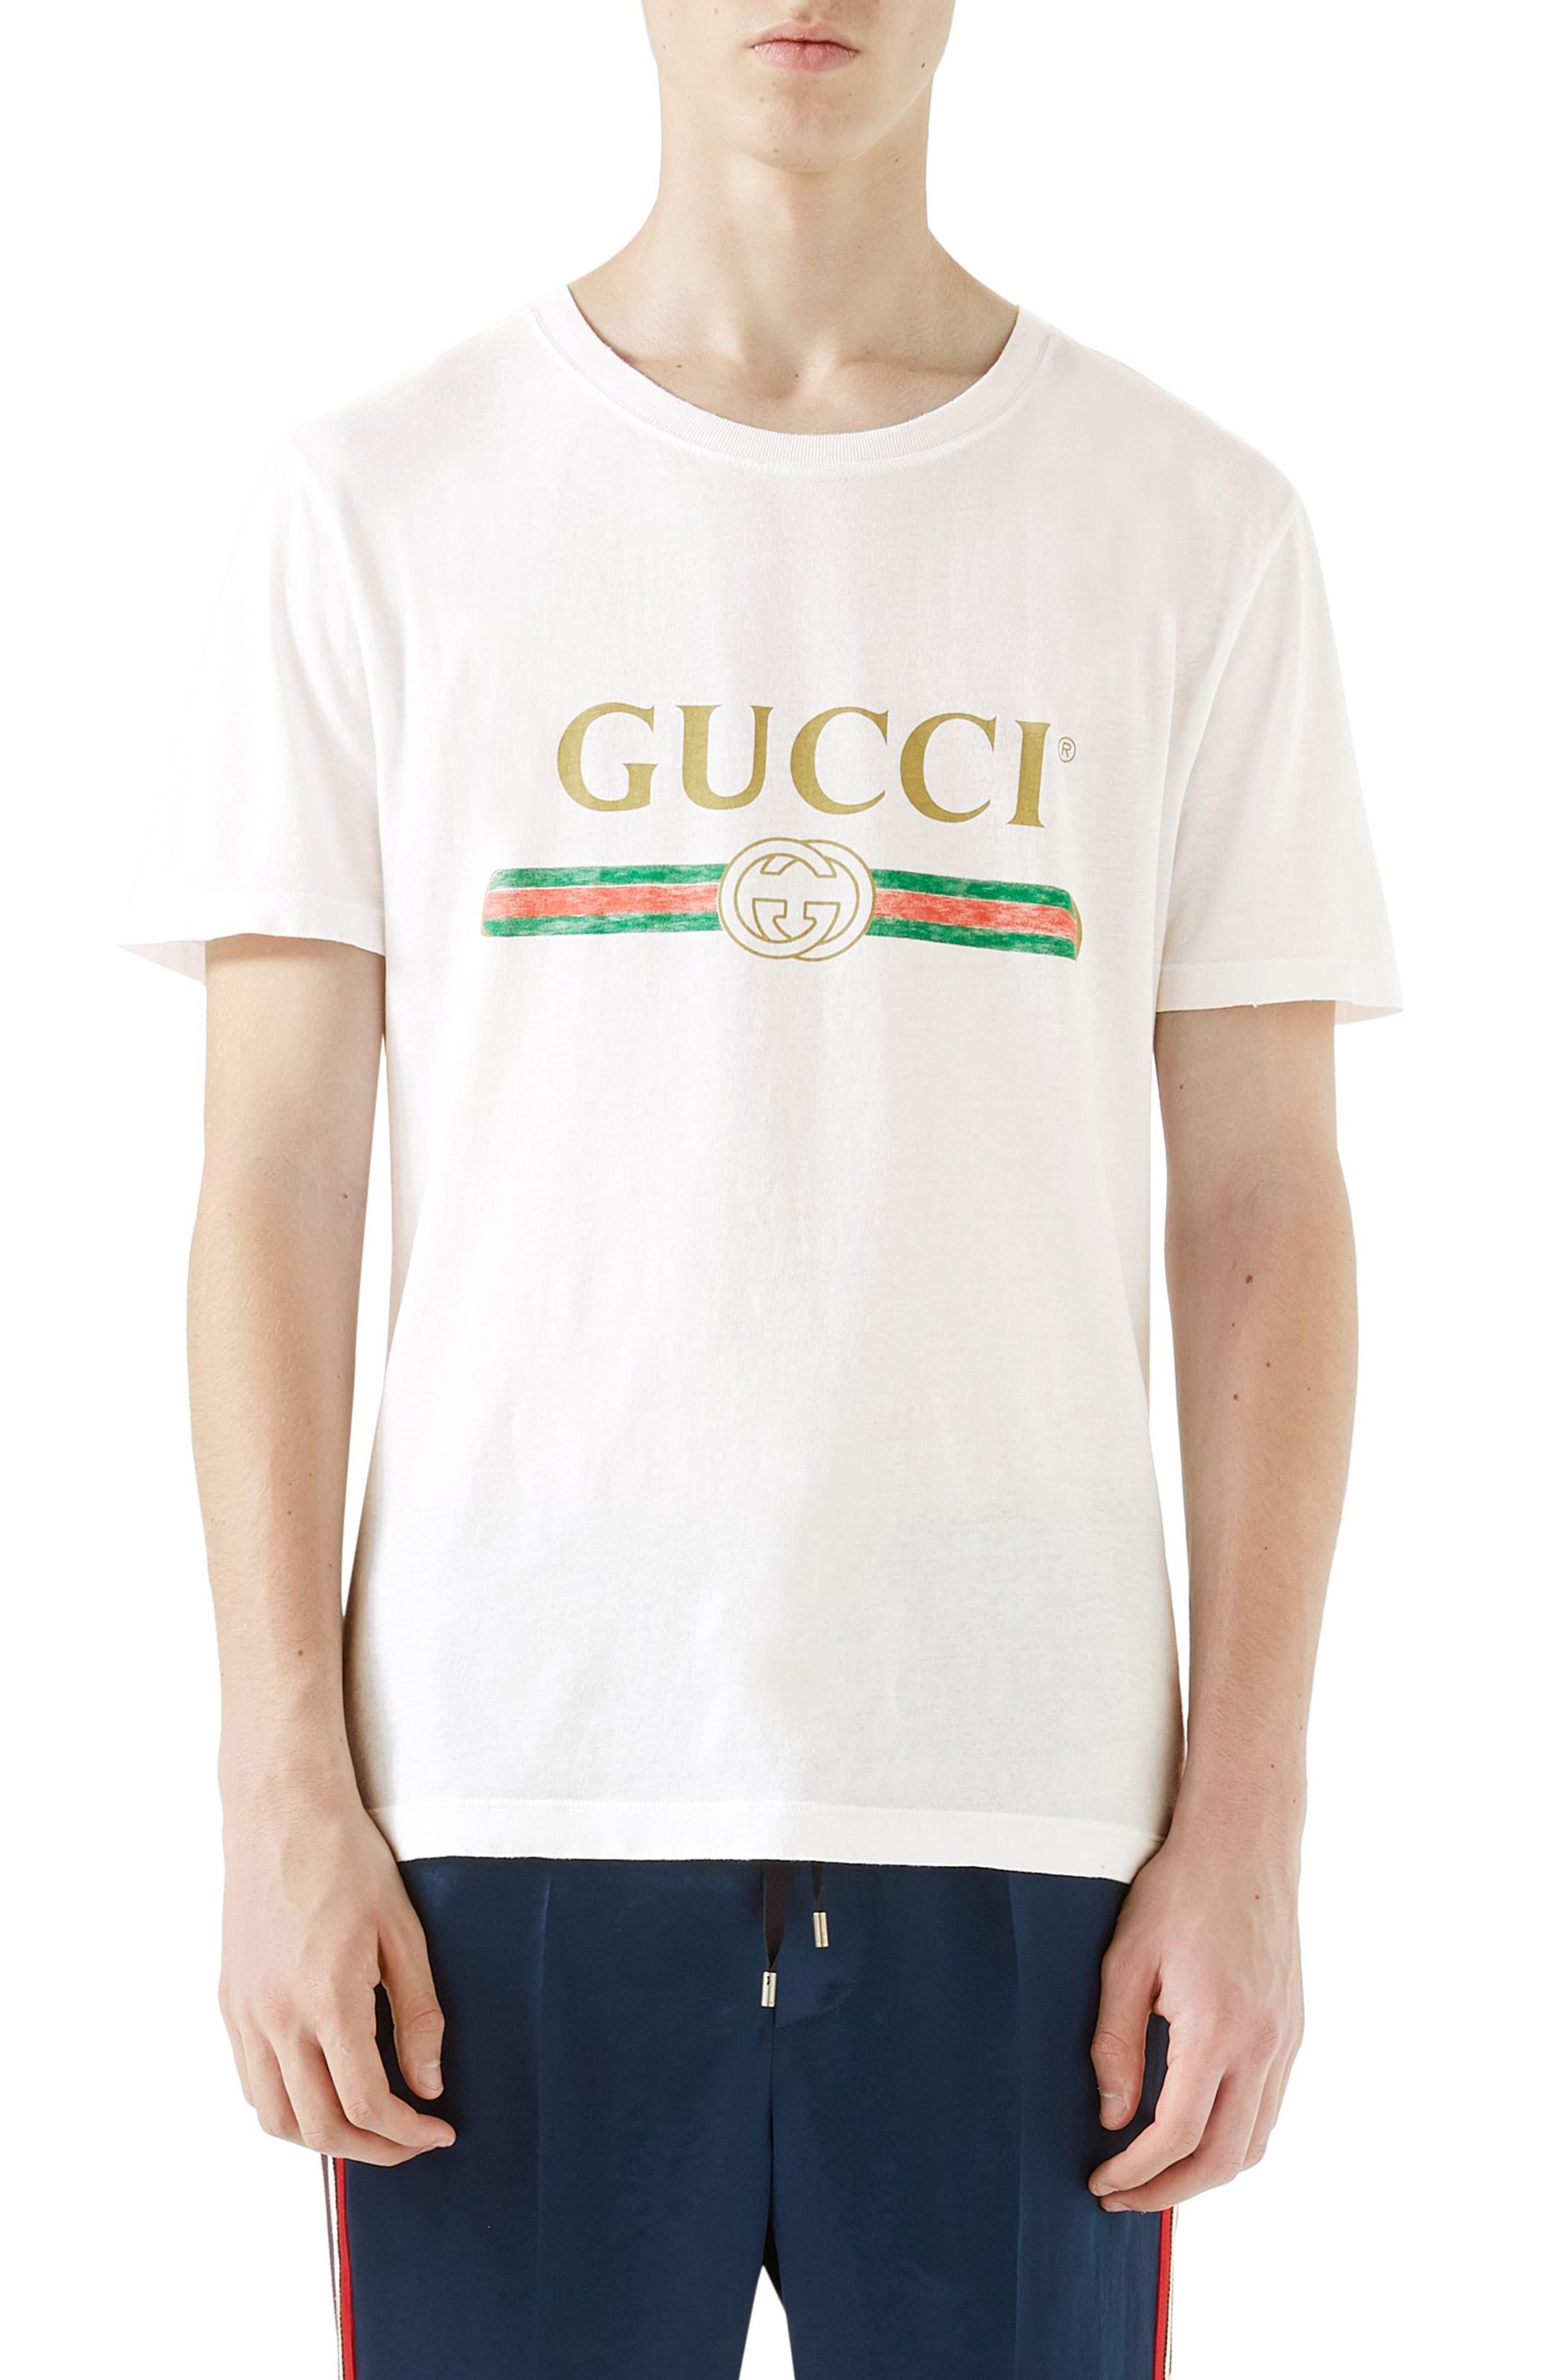 gucci t shirt white price